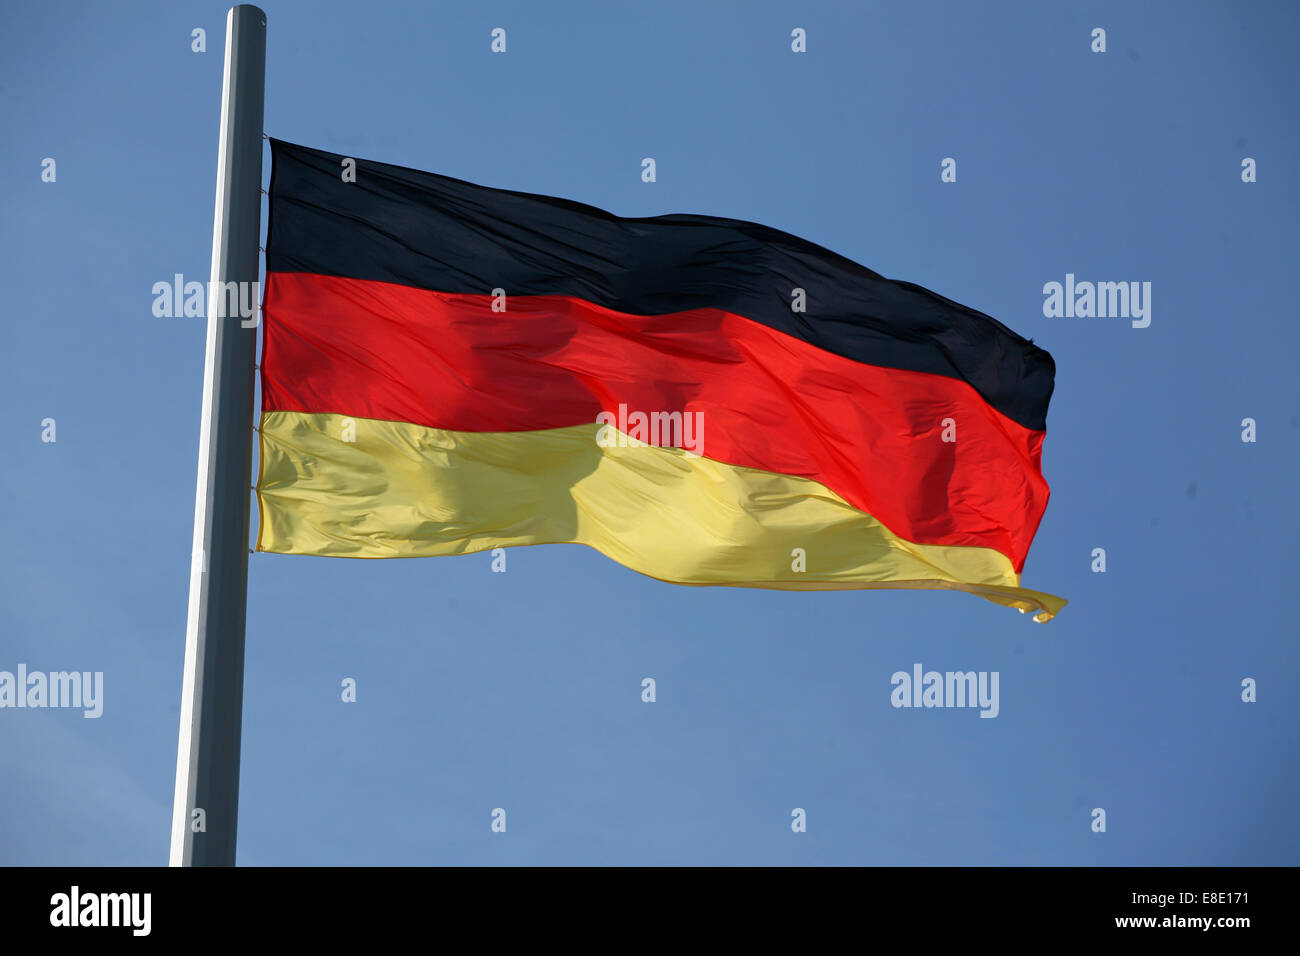 Flagge Deutschland Bundesflagge und Handelsflagge the flag of Germany Stock Photo